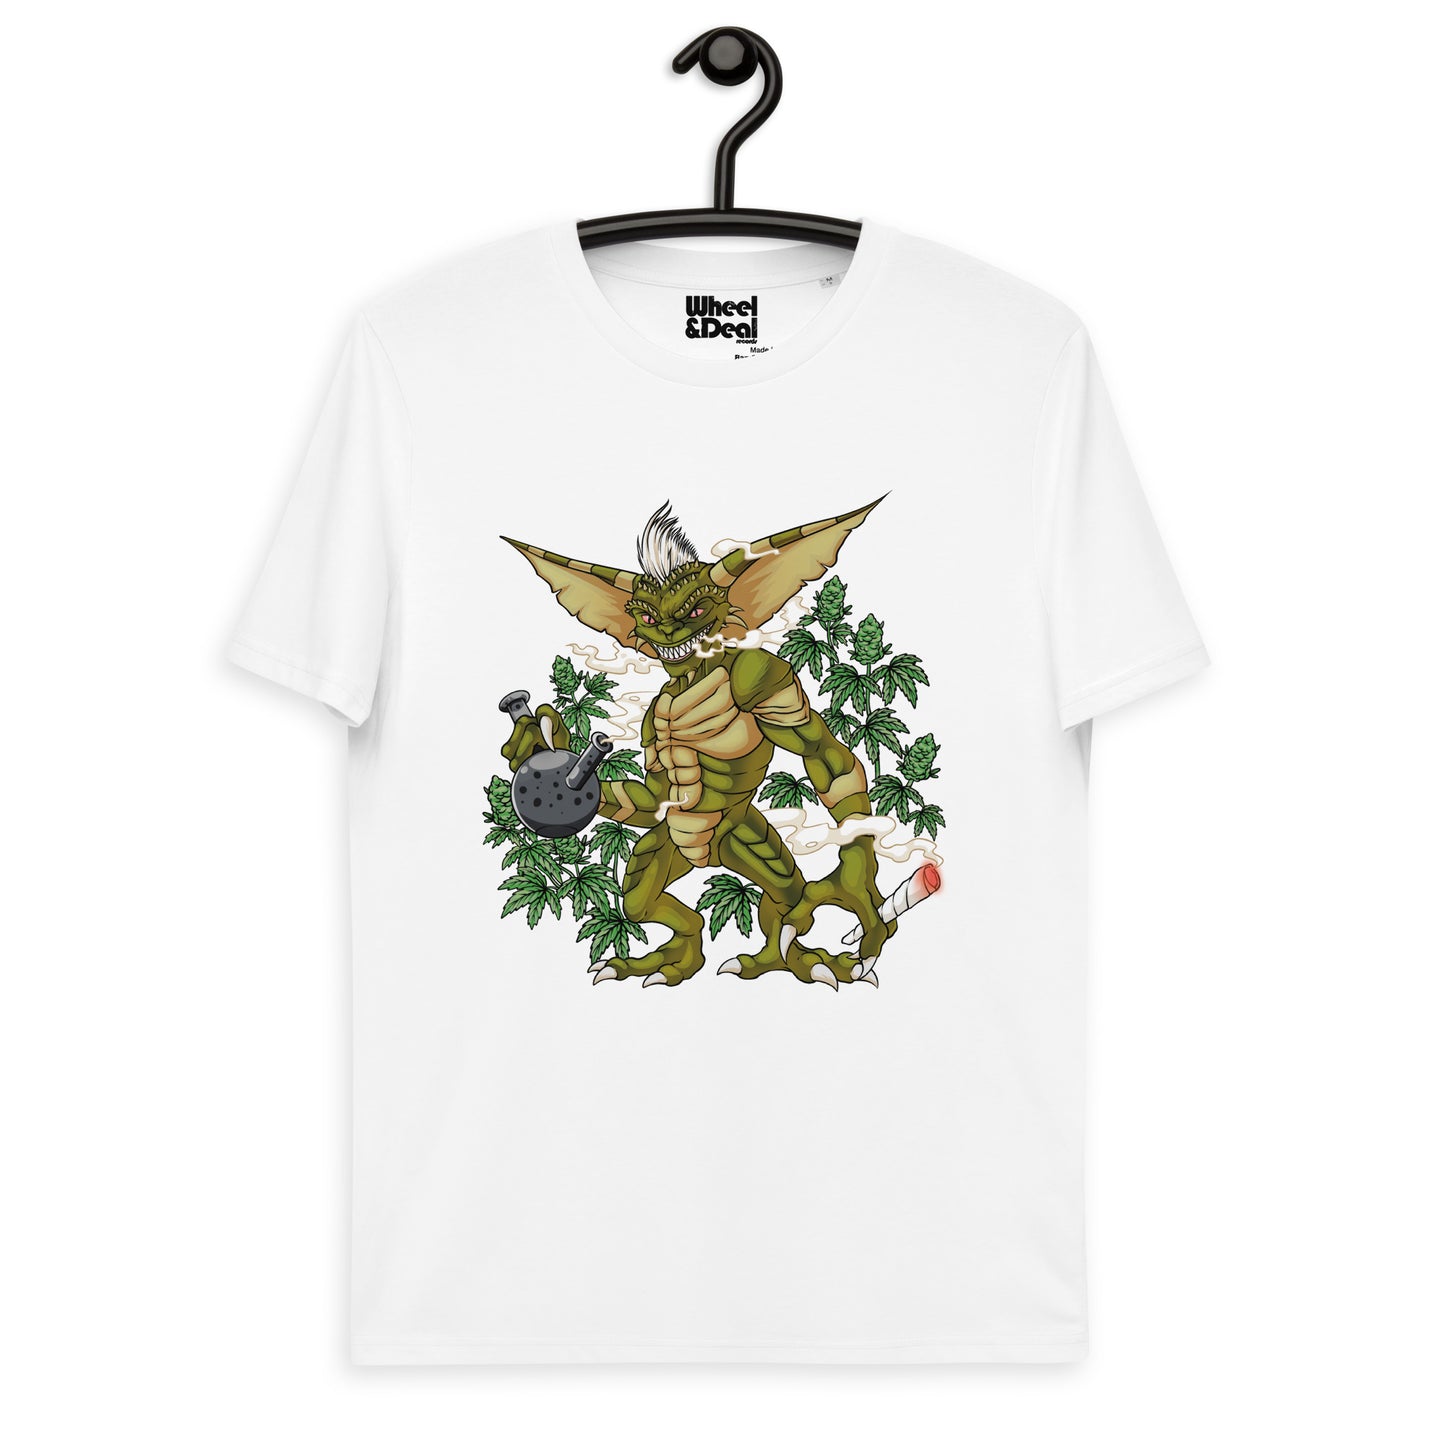 Ganja Gremlin (Contra) Unisex organic cotton t-shirt